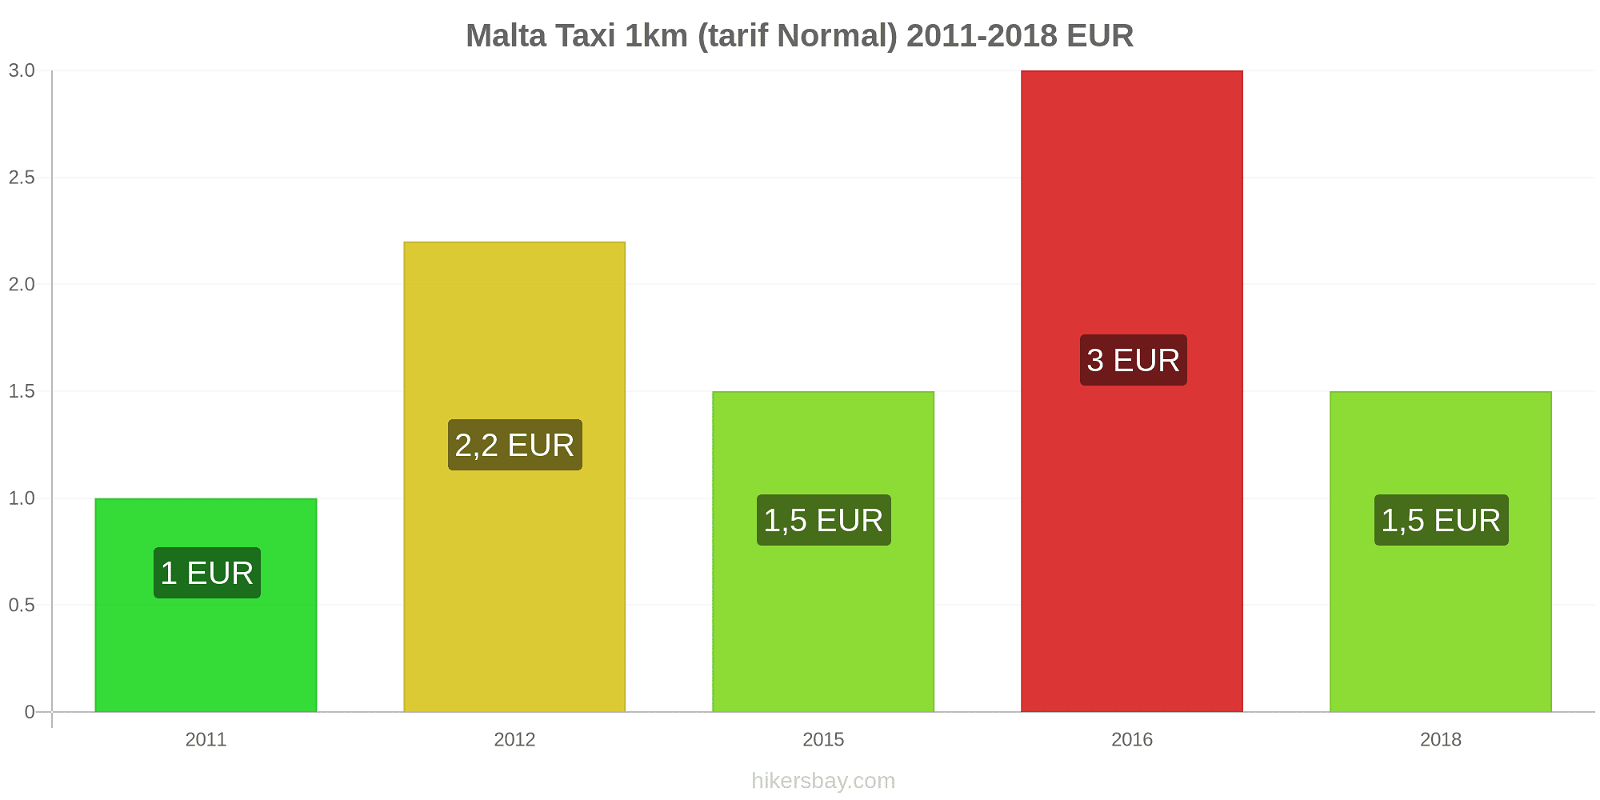 Malta schimbări de prețuri Taxi 1km (tarif normal) hikersbay.com